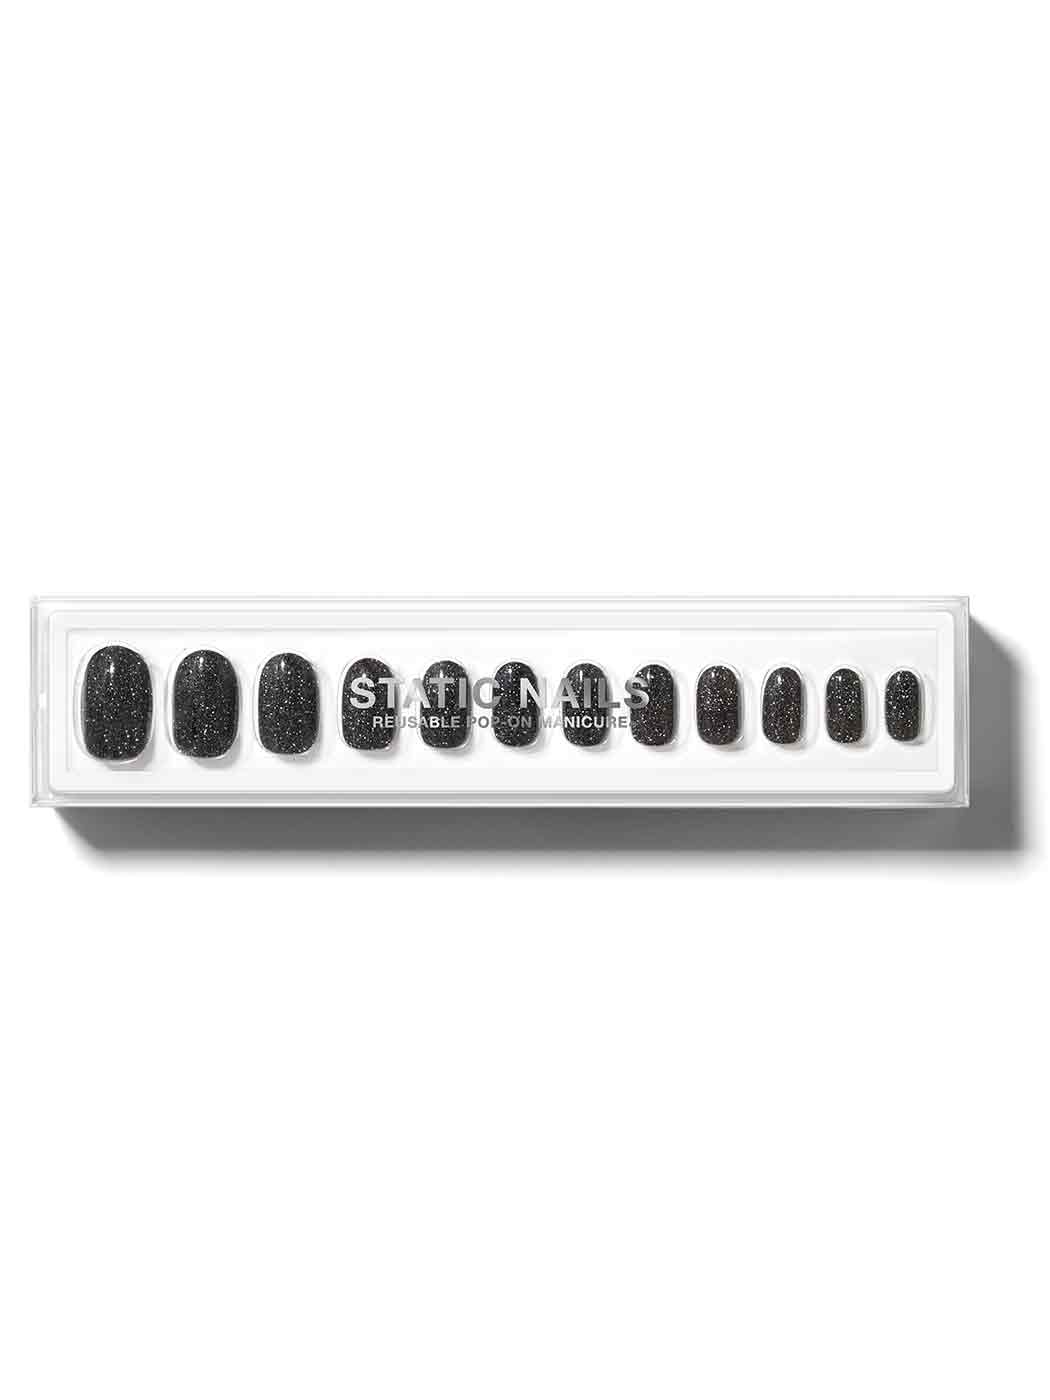 Dark grey/black nails with silver glitter in round shape,